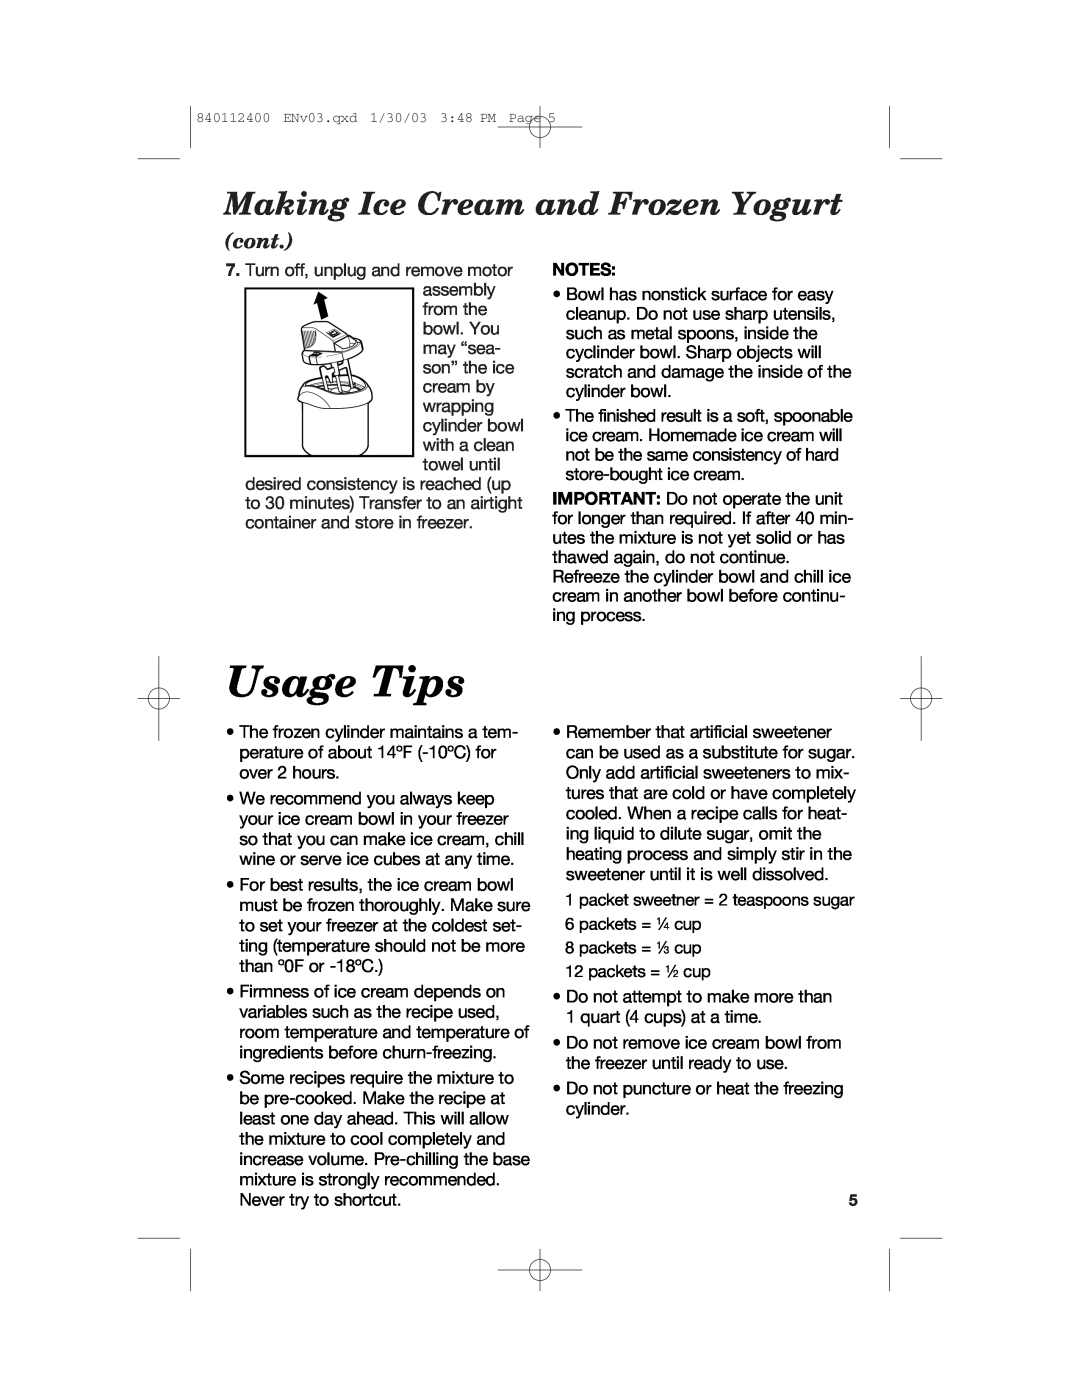 Hamilton Beach 68120 manual Usage Tips, cont, Making Ice Cream and Frozen Yogurt 